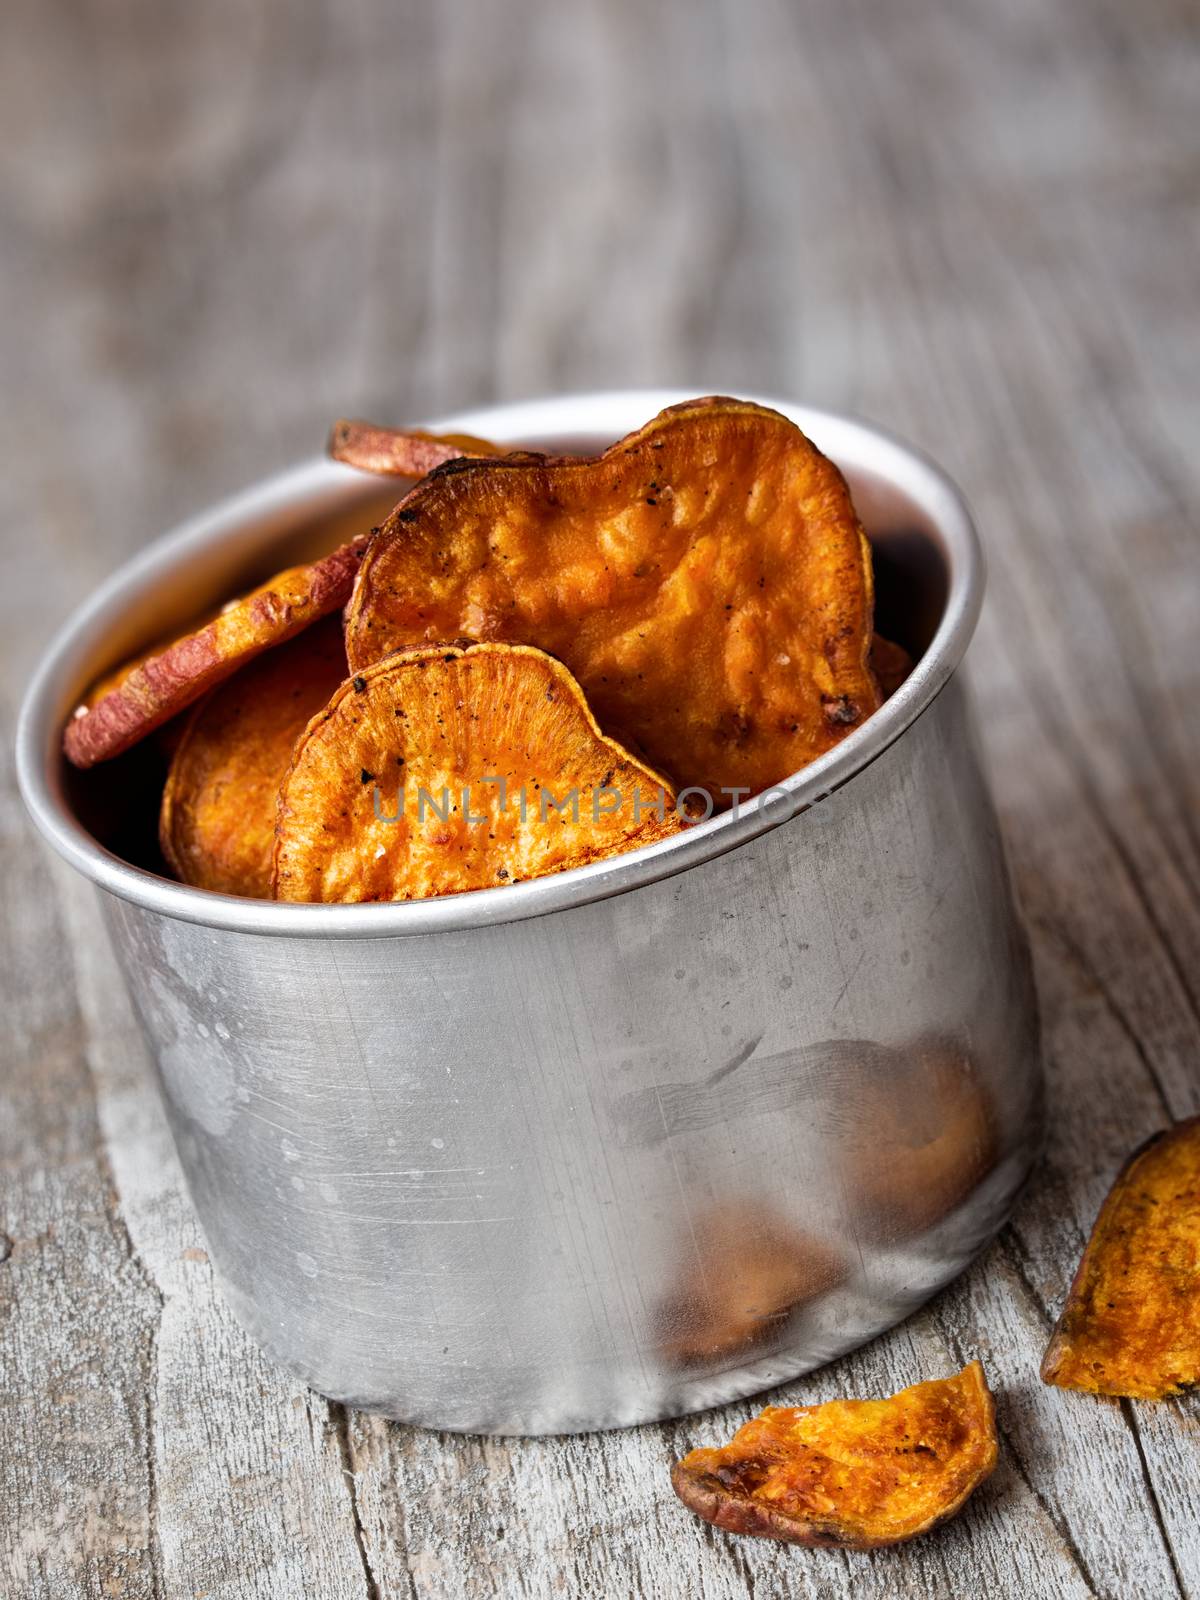 rustic golden sweet potato chips by zkruger